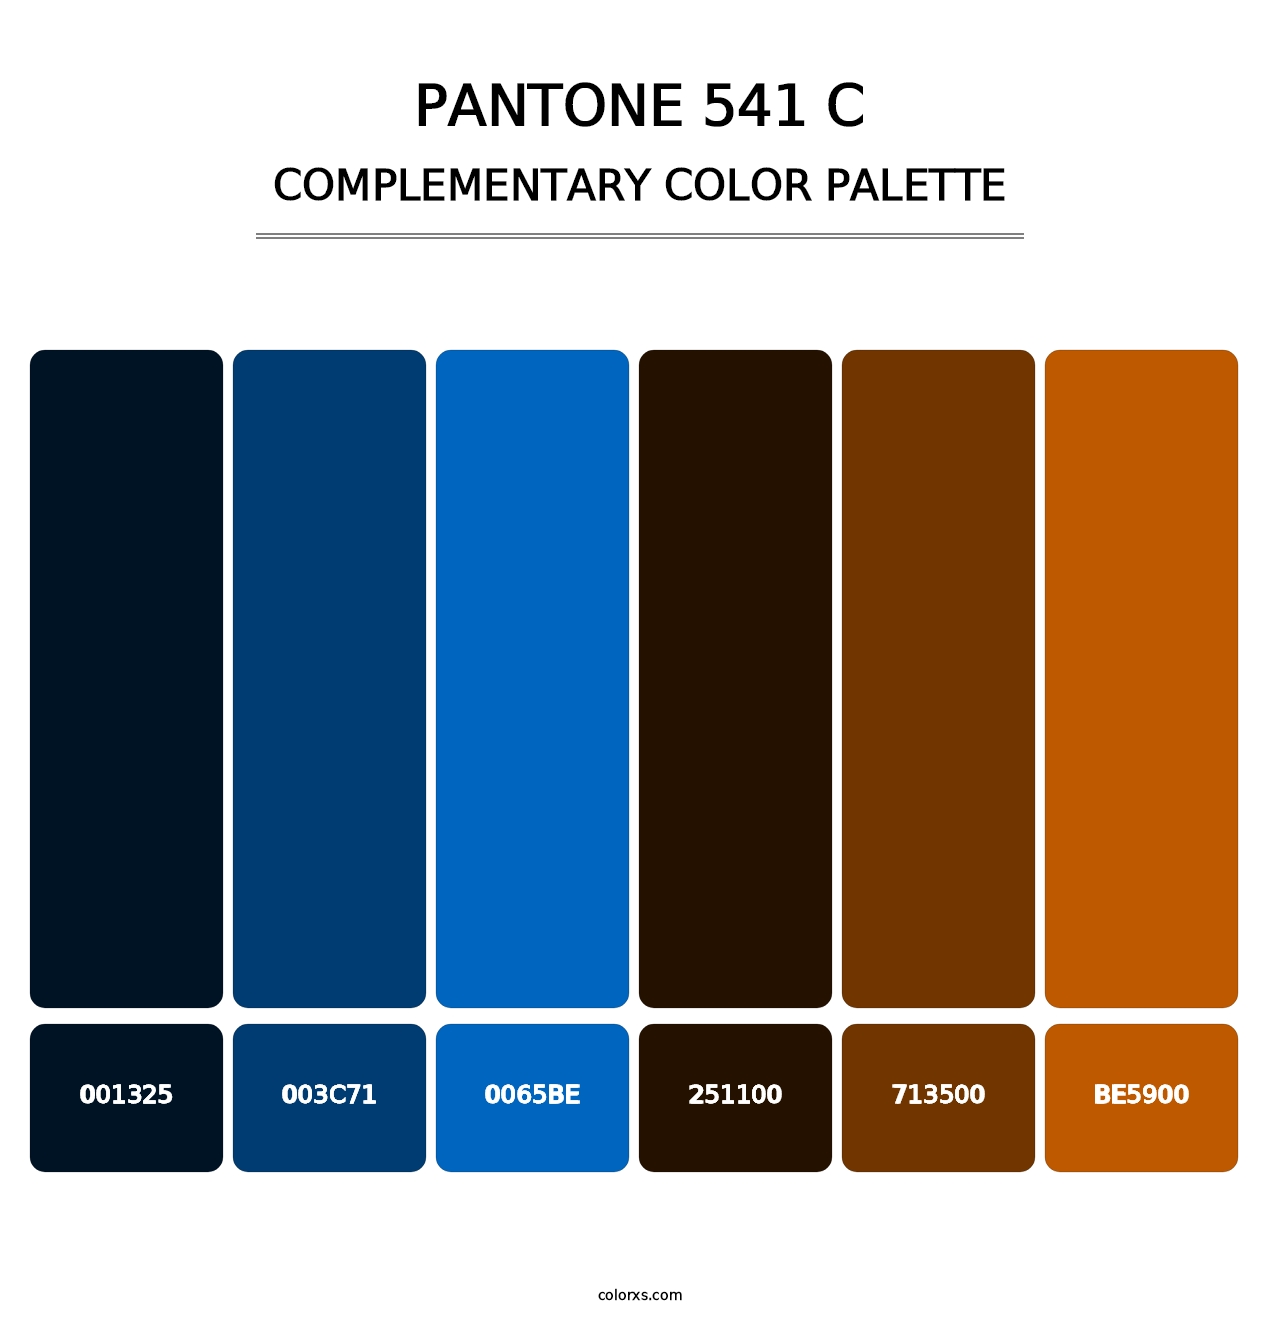 PANTONE 541 C - Complementary Color Palette